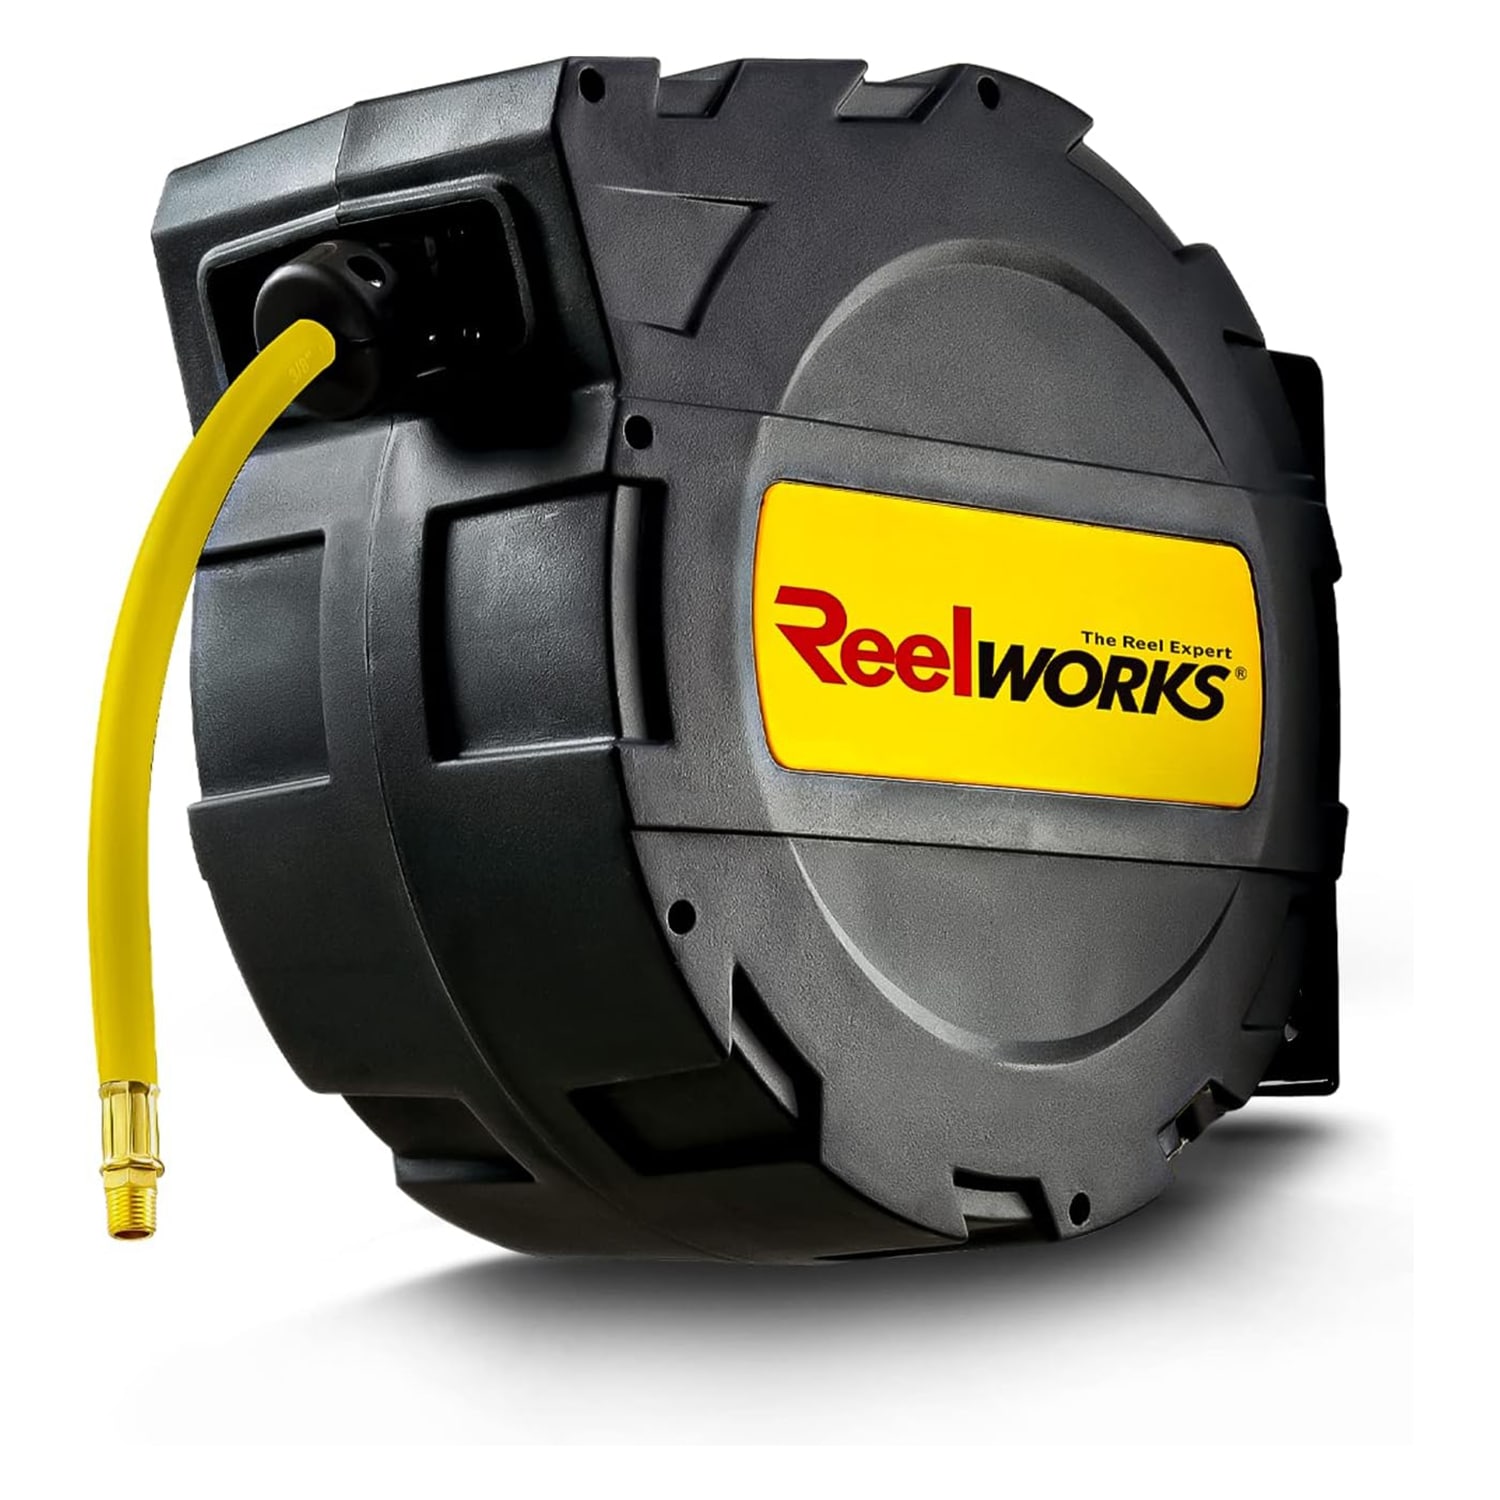 Reelworks Air Hose Reel Swivel Mount- 3/8 In X 50 Ft, 3 Ft Lead-in